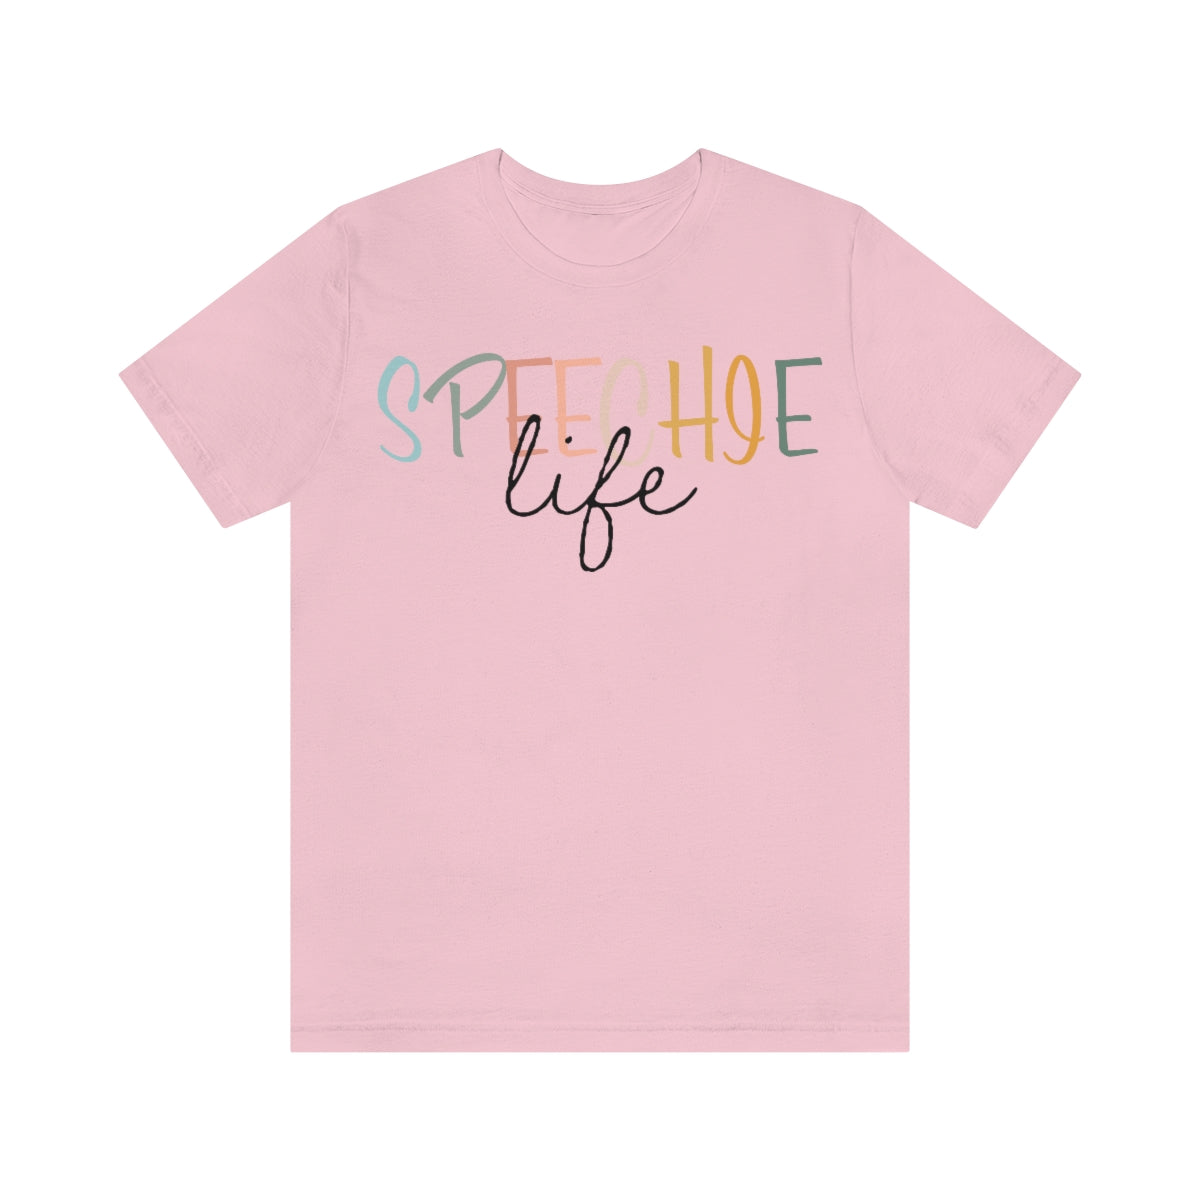 Speechie Life Shirt SLP Speech Therapy Therapist Graphic Tee